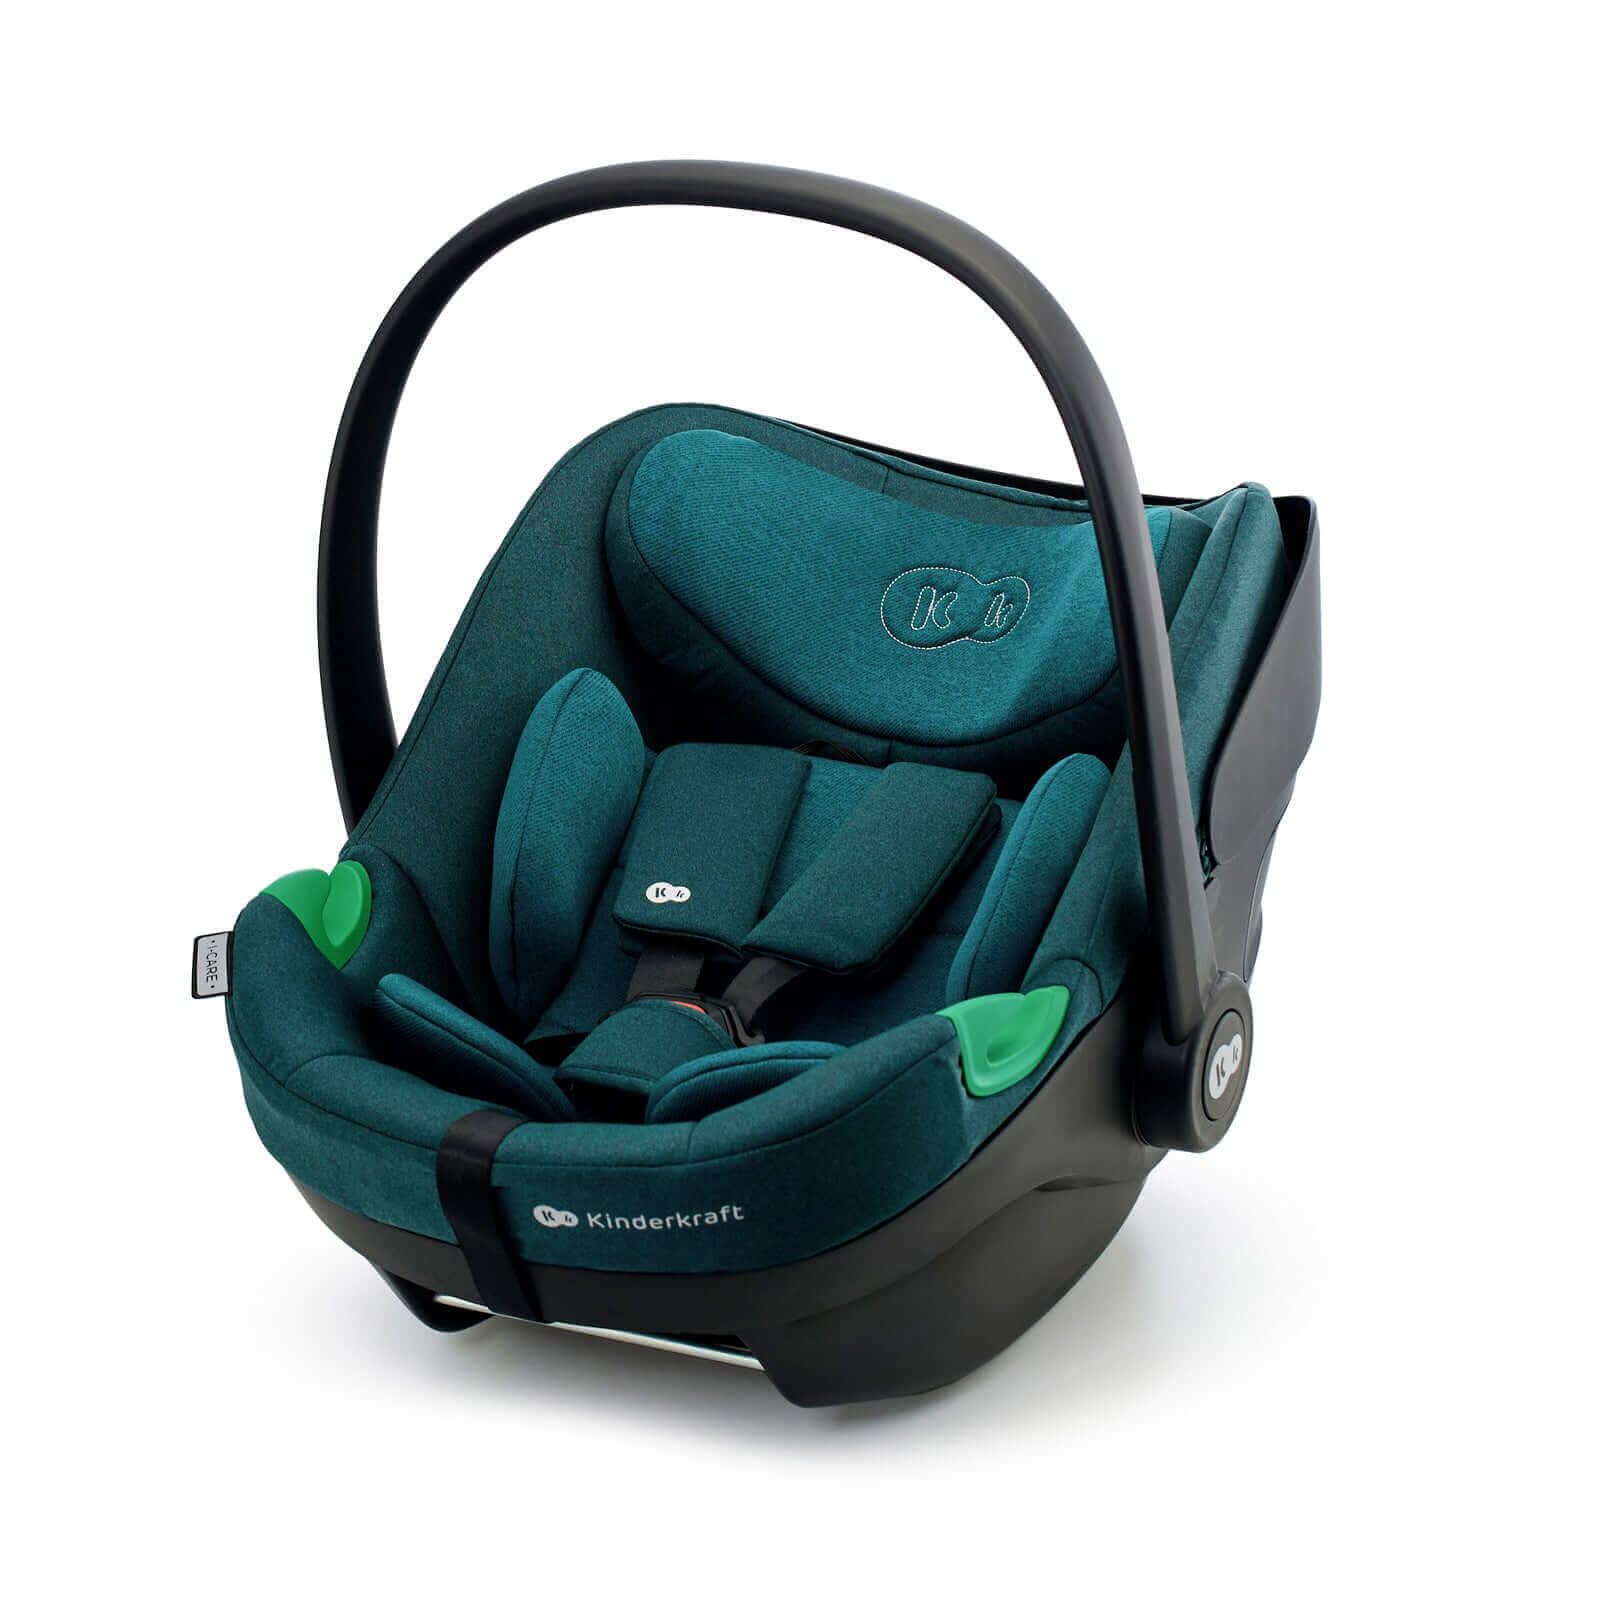 Siège auto Kinderkraft I-CARE : i-Size pour bébés (0-15 mois